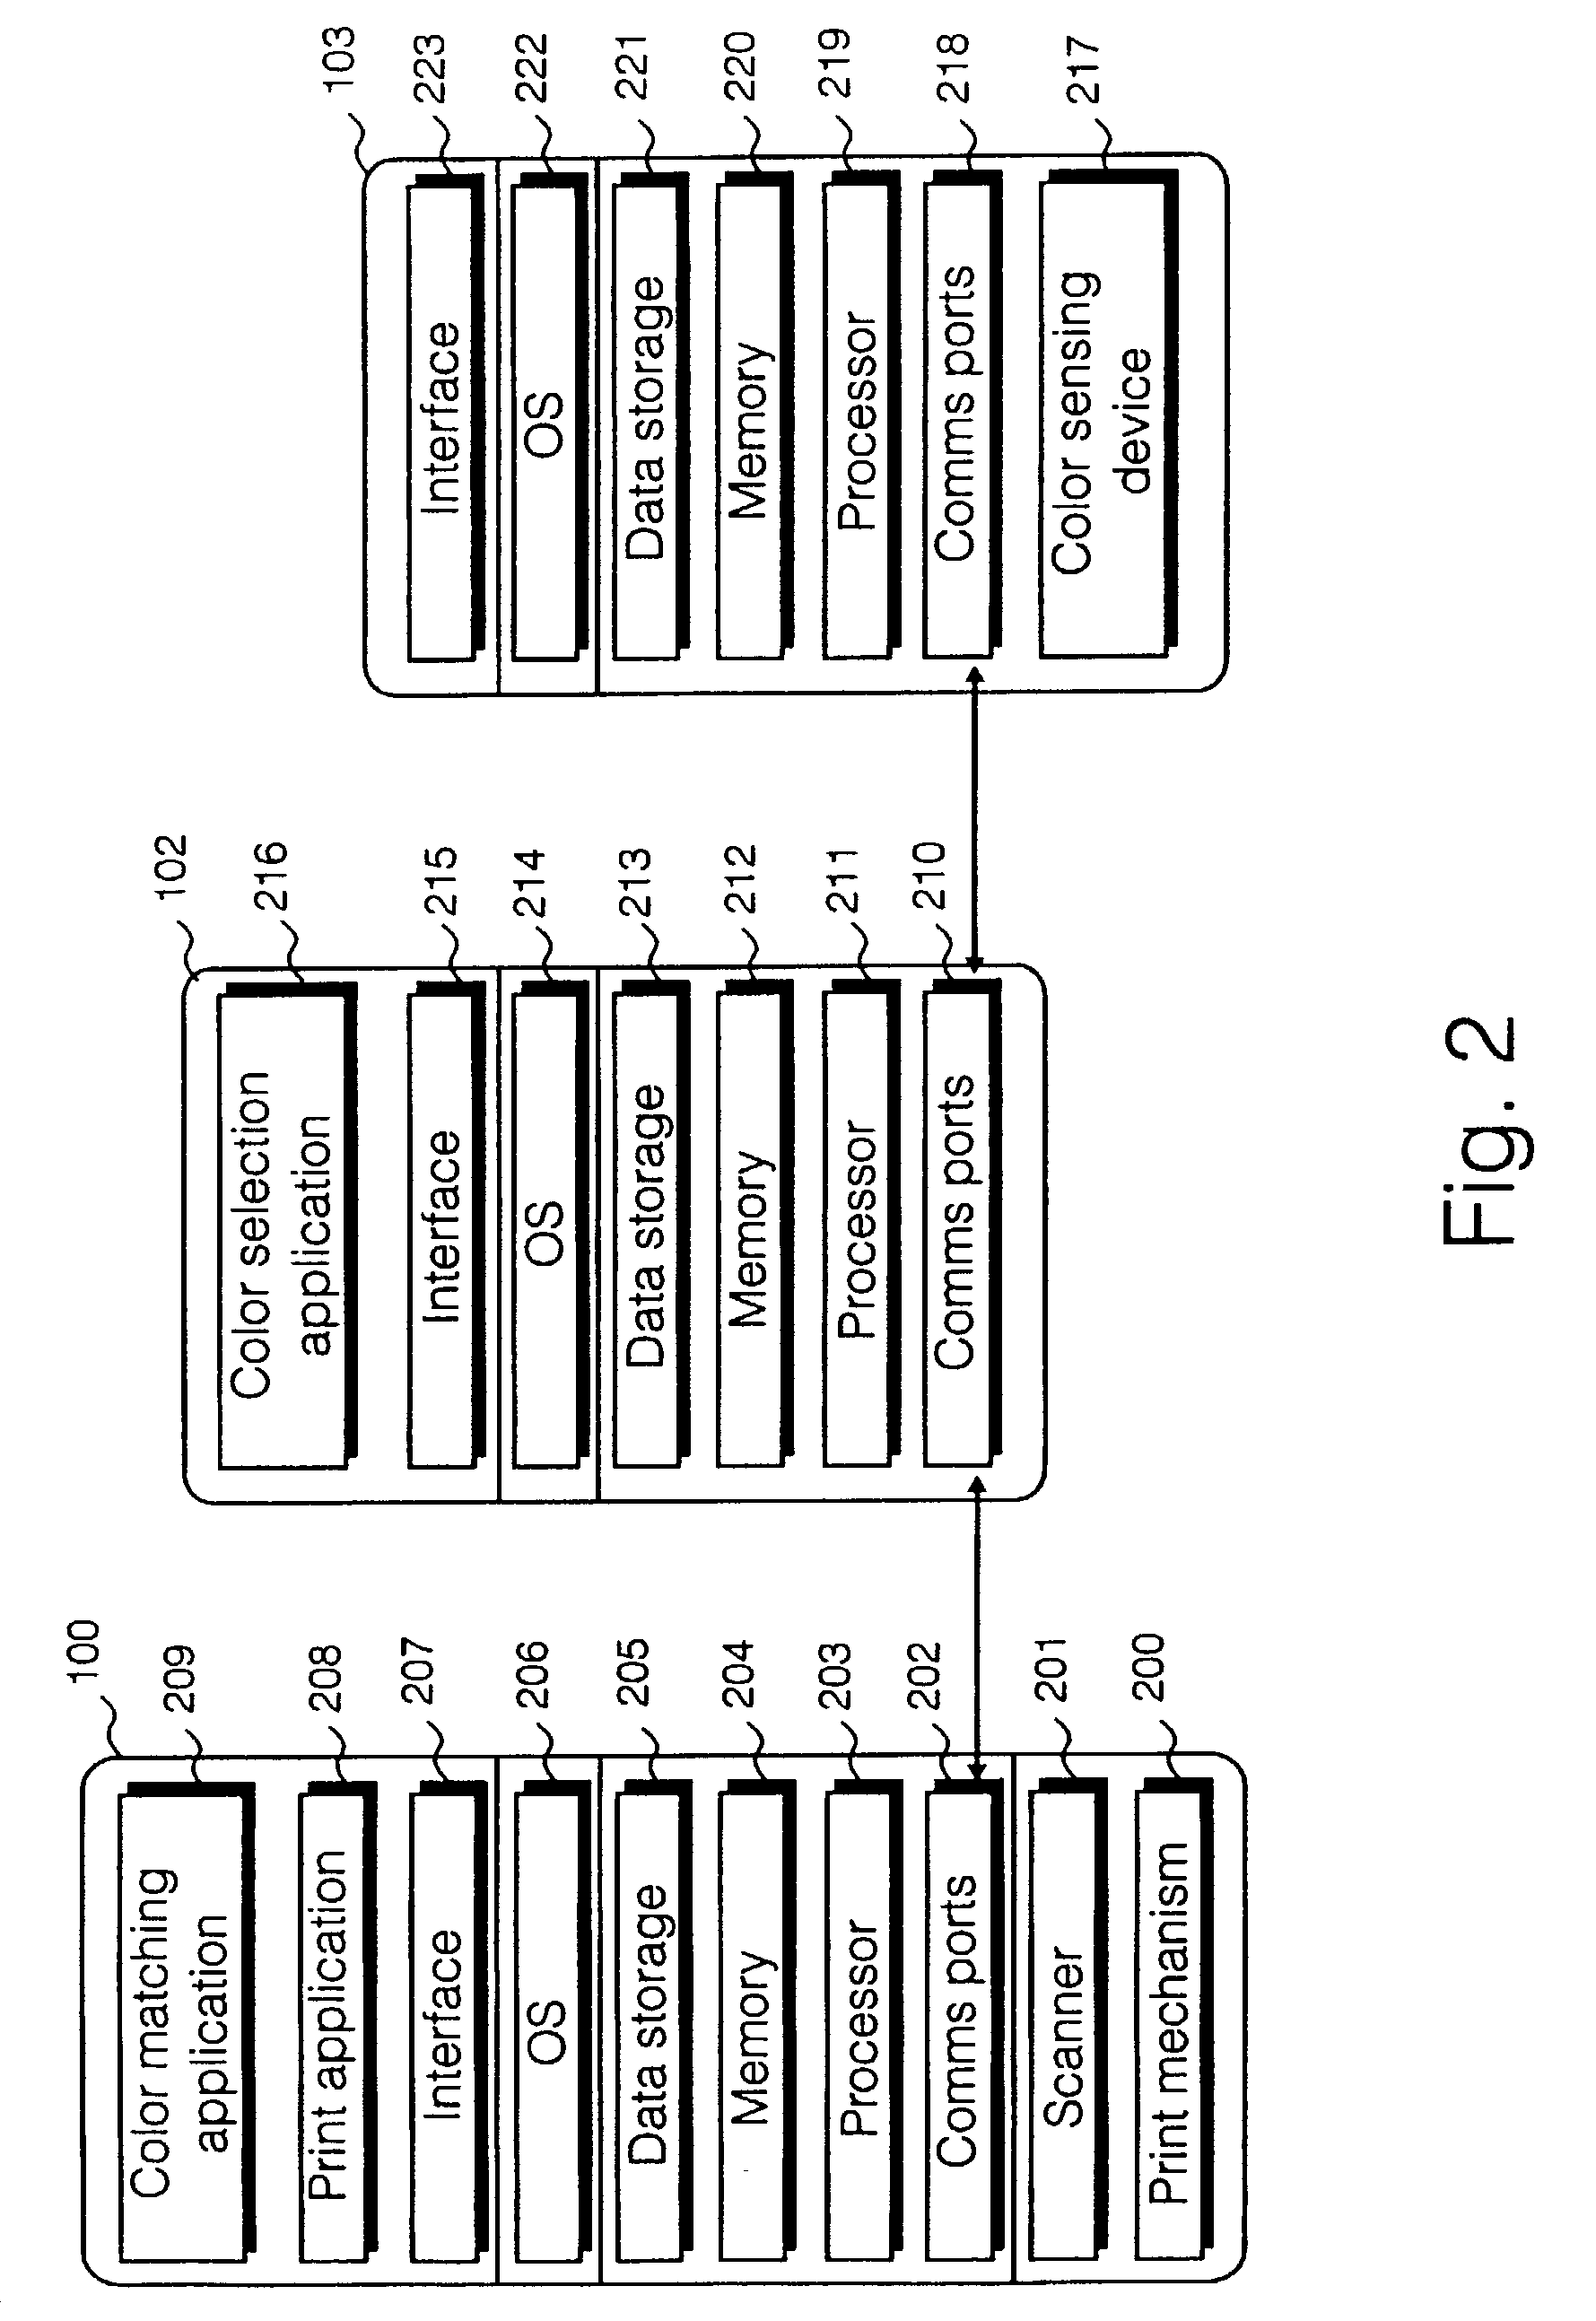 Spot color application in printer device